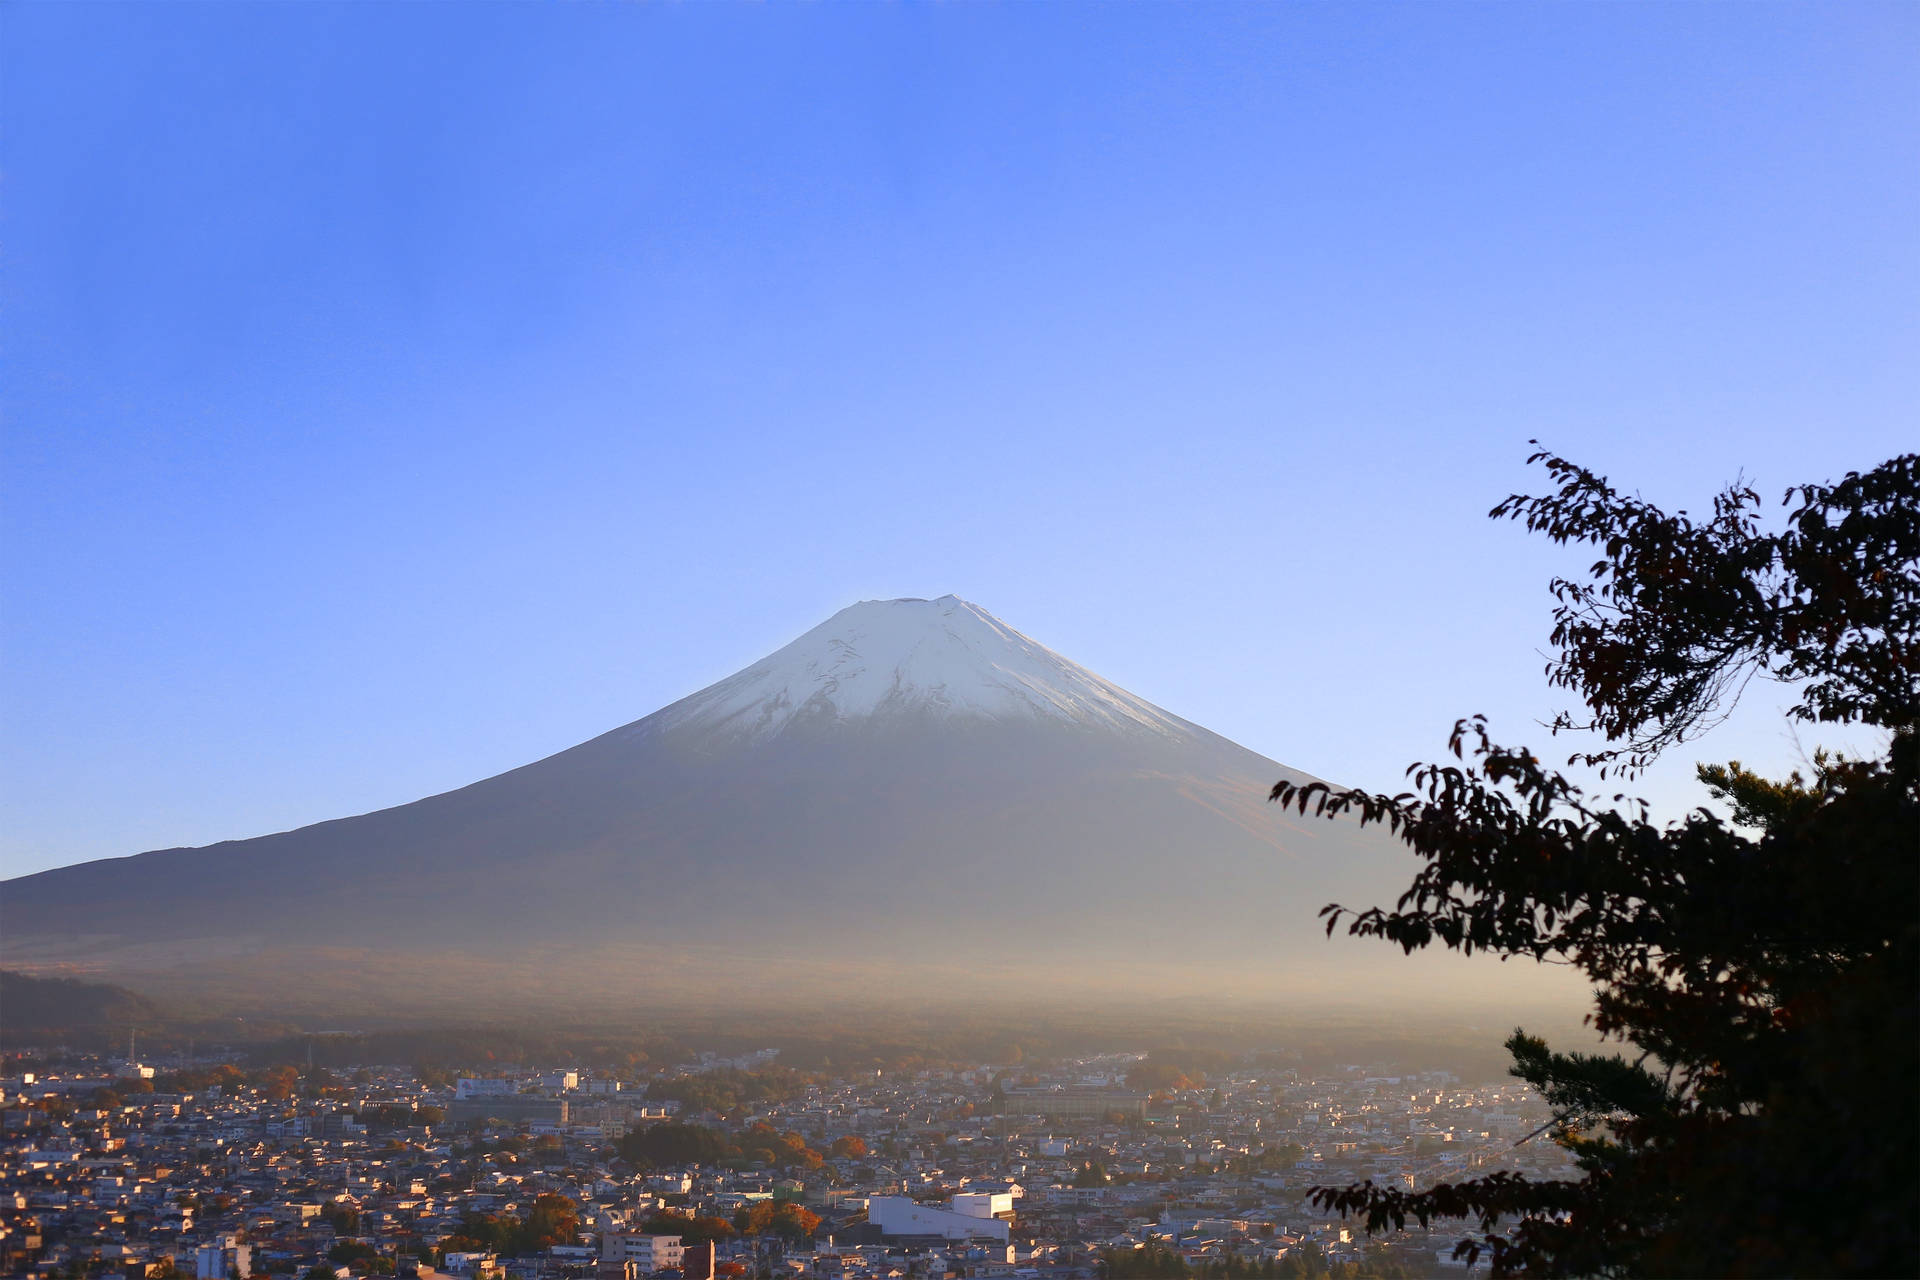 Massive Mount Fuji